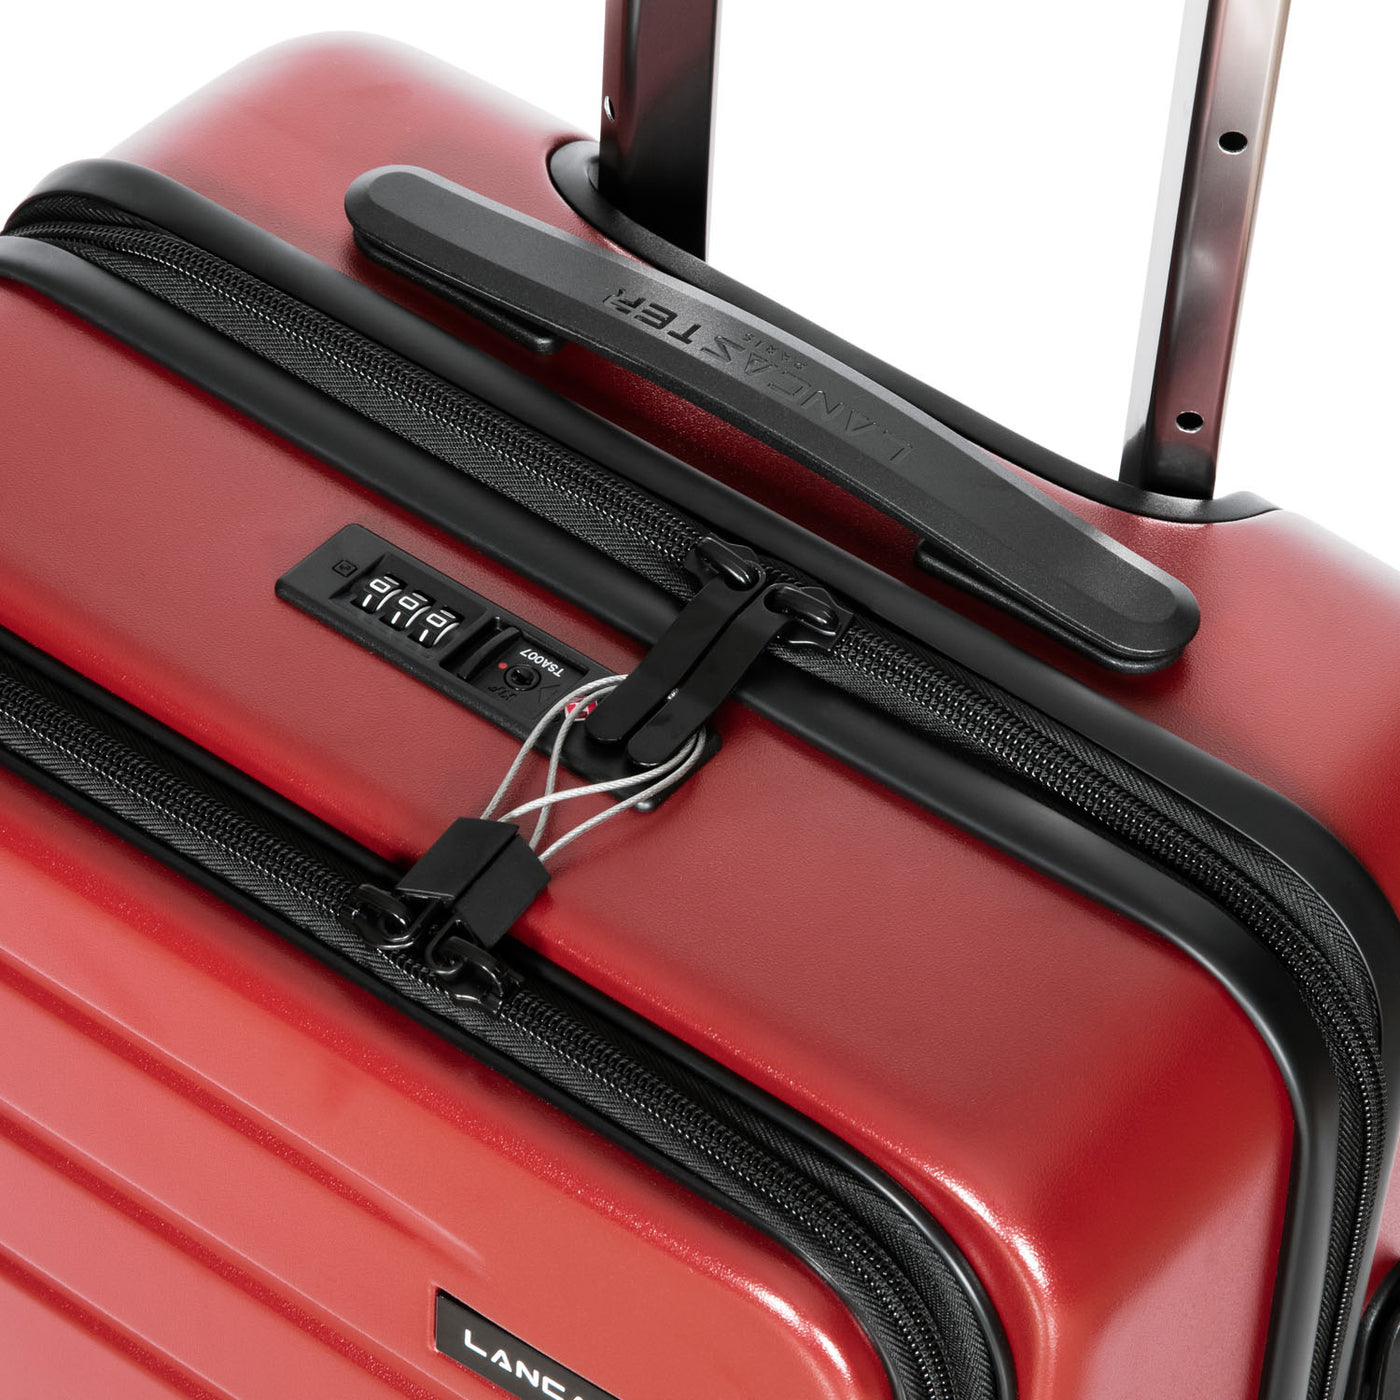 bagage cabine - bagages #couleur_carmin